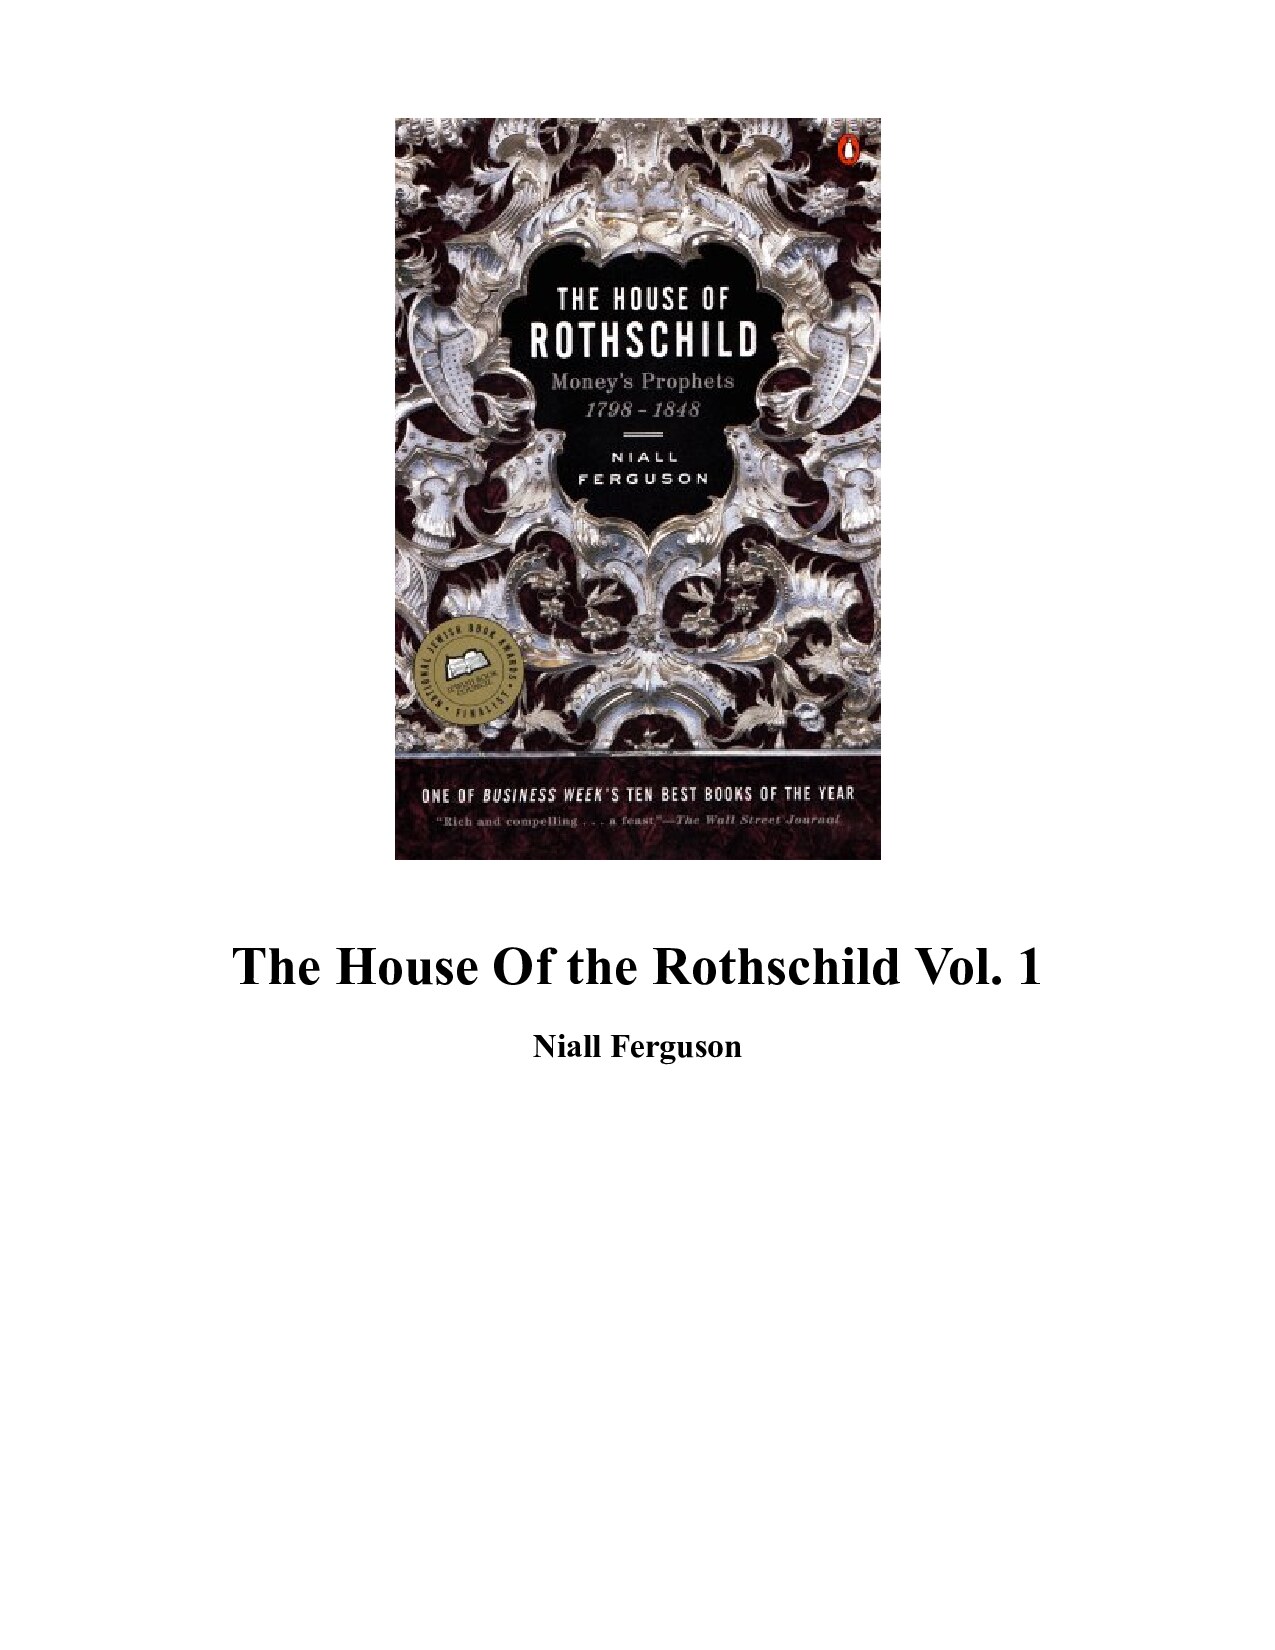 Ferguson, Niall; The House of the Rothschilds